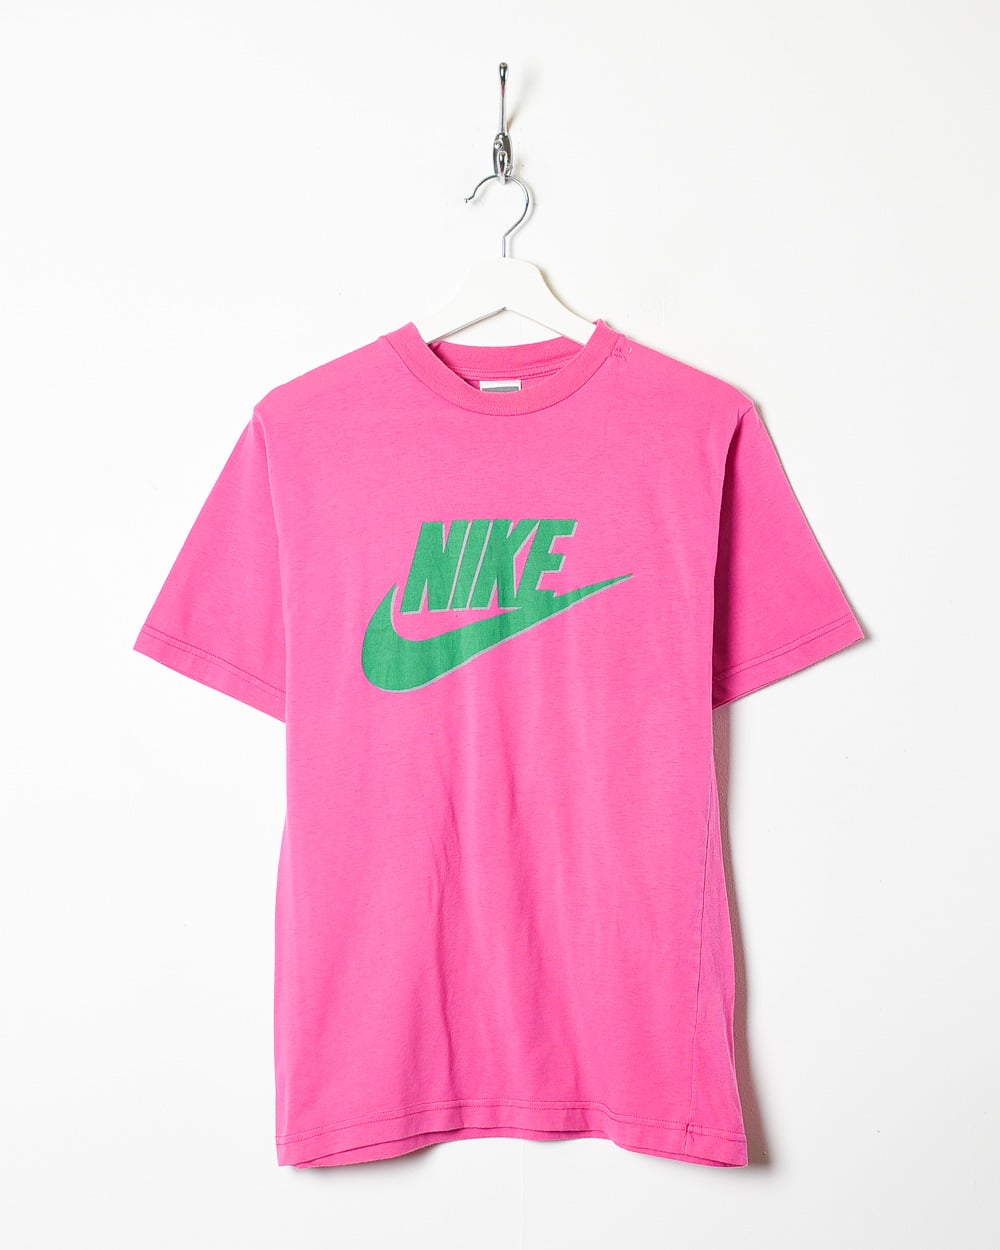 Pink Nike T-Shirt - Small